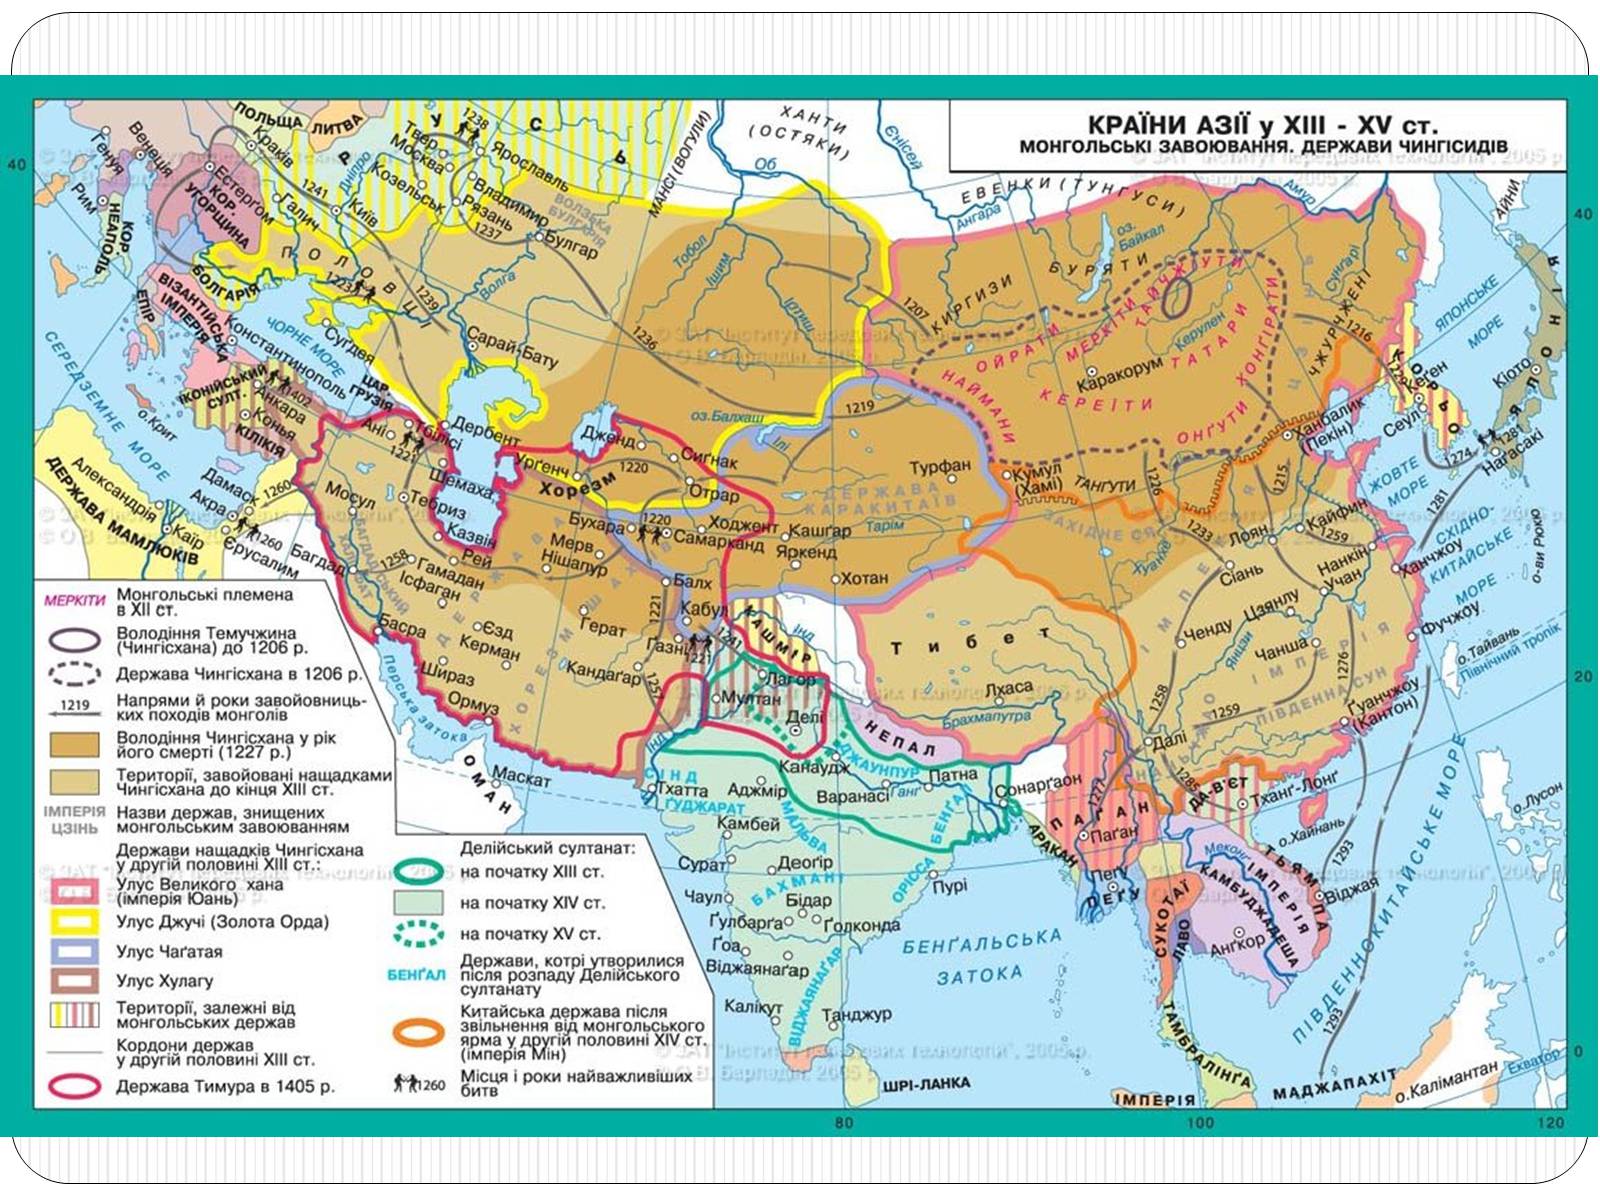 Восток в 10 веке. Карта средней Азии 15 века. Карта средней Азии 13 века. Средняя Азия в 15 веке карта. Карта Азии в средние века.